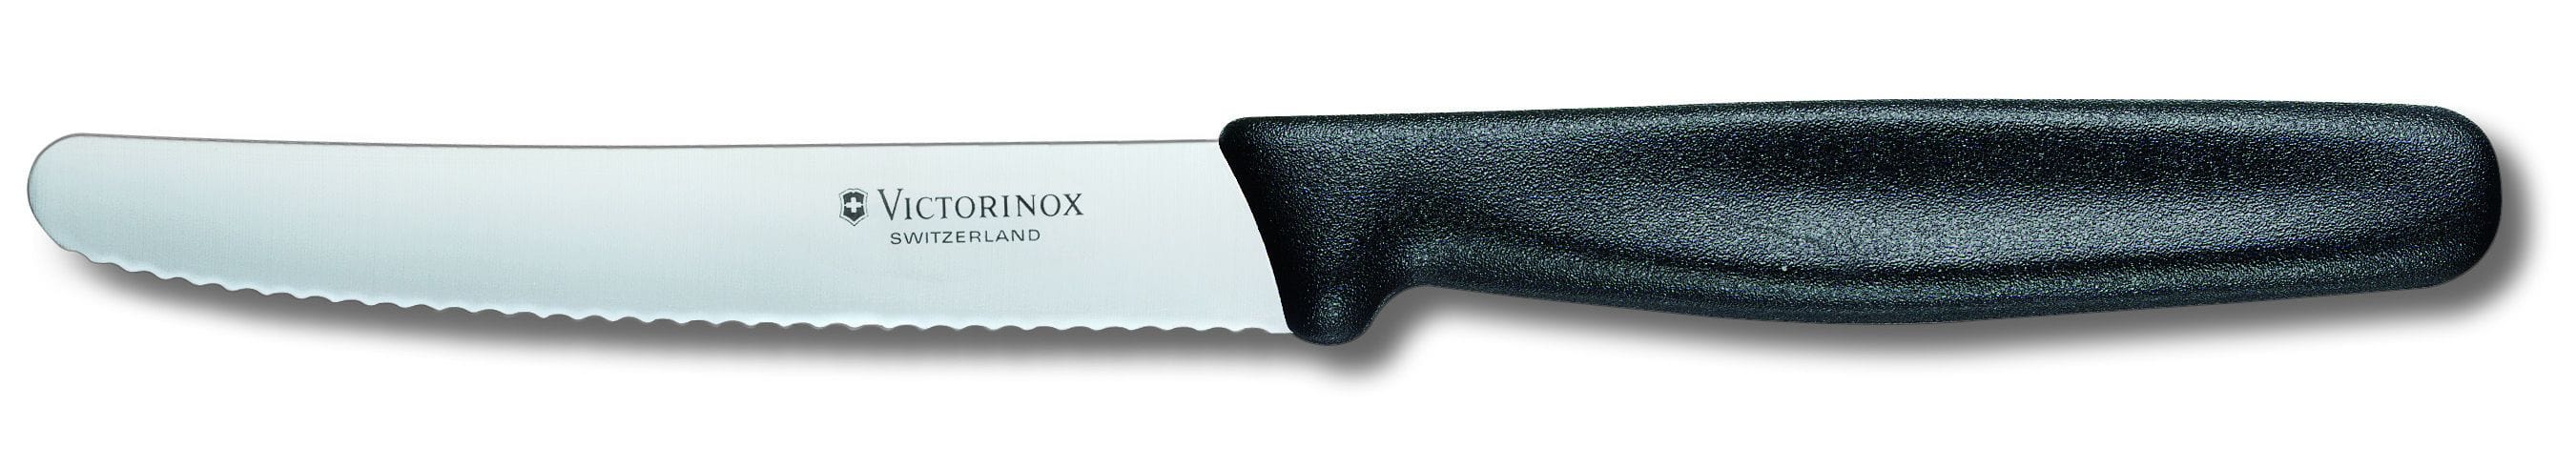 Victorinox Tomota Knife Black Nylon Handle - 5.0833